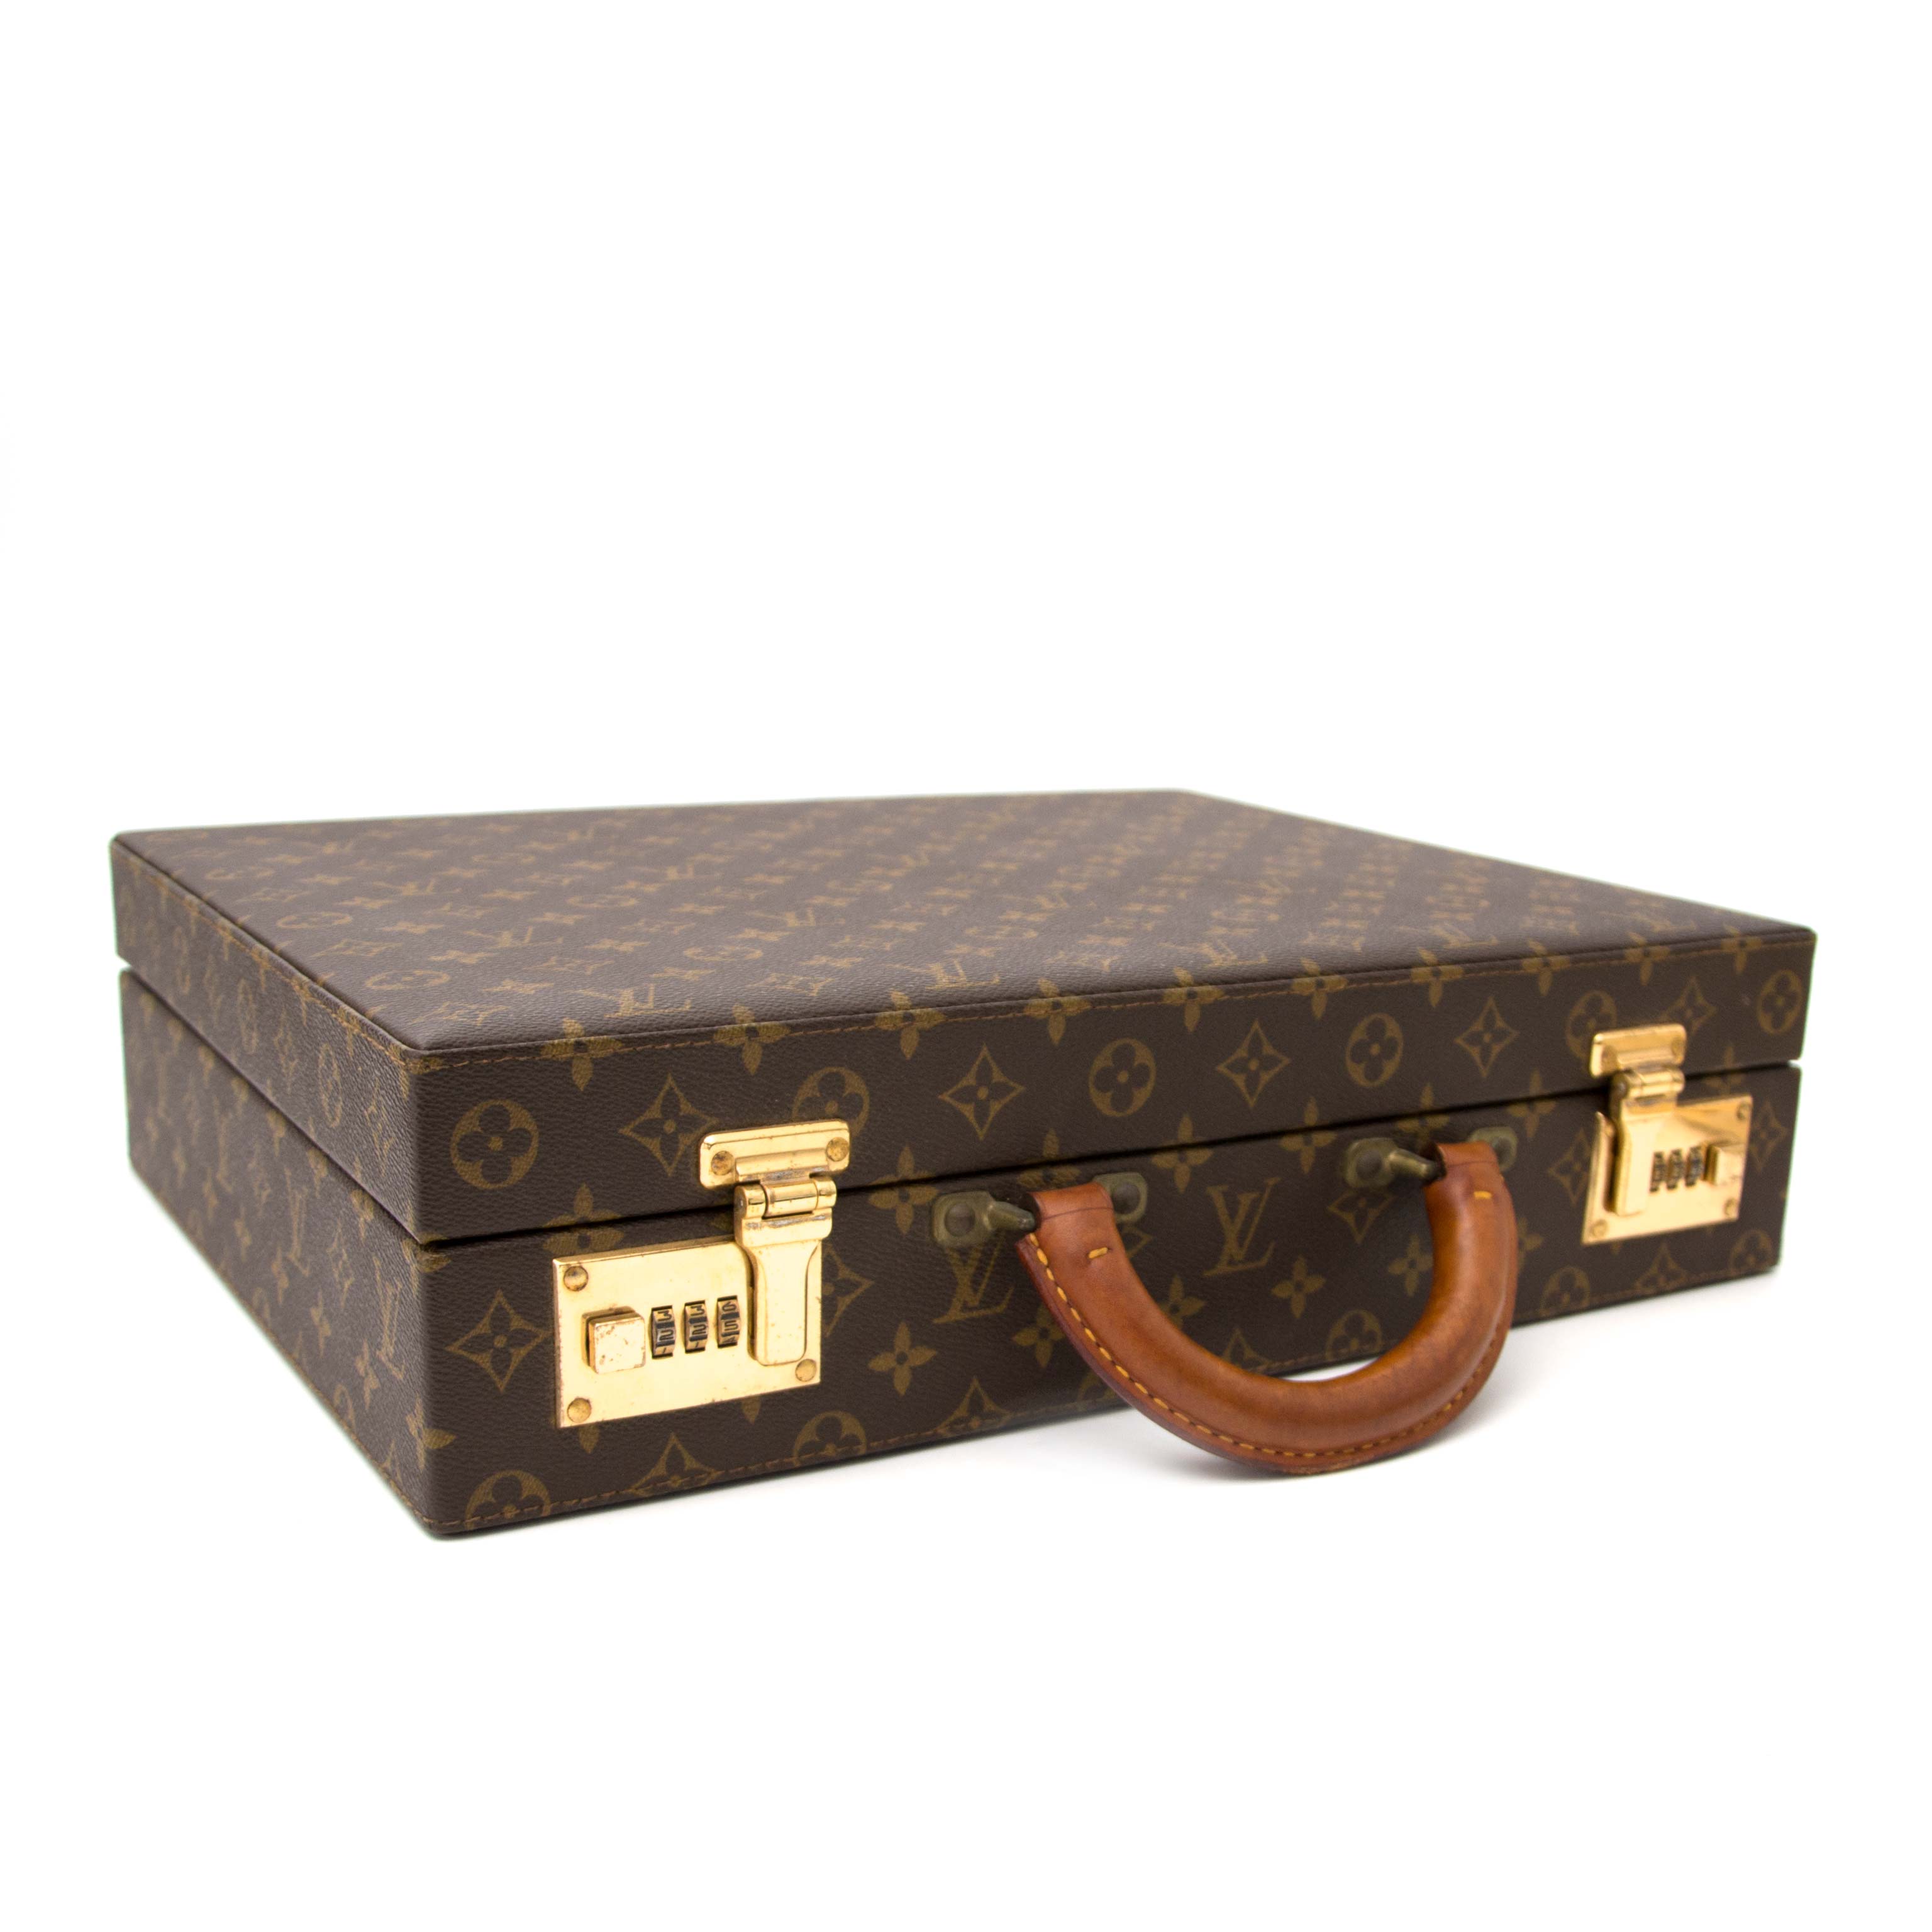 Inseller - Louis Vuitton Monogram MM Beverly Briefcase - only USD 765.00!  .⁠ .⁠ .⁠ #inseller #lv #lvbag #lvbags #lvlover #louisvuittonbags